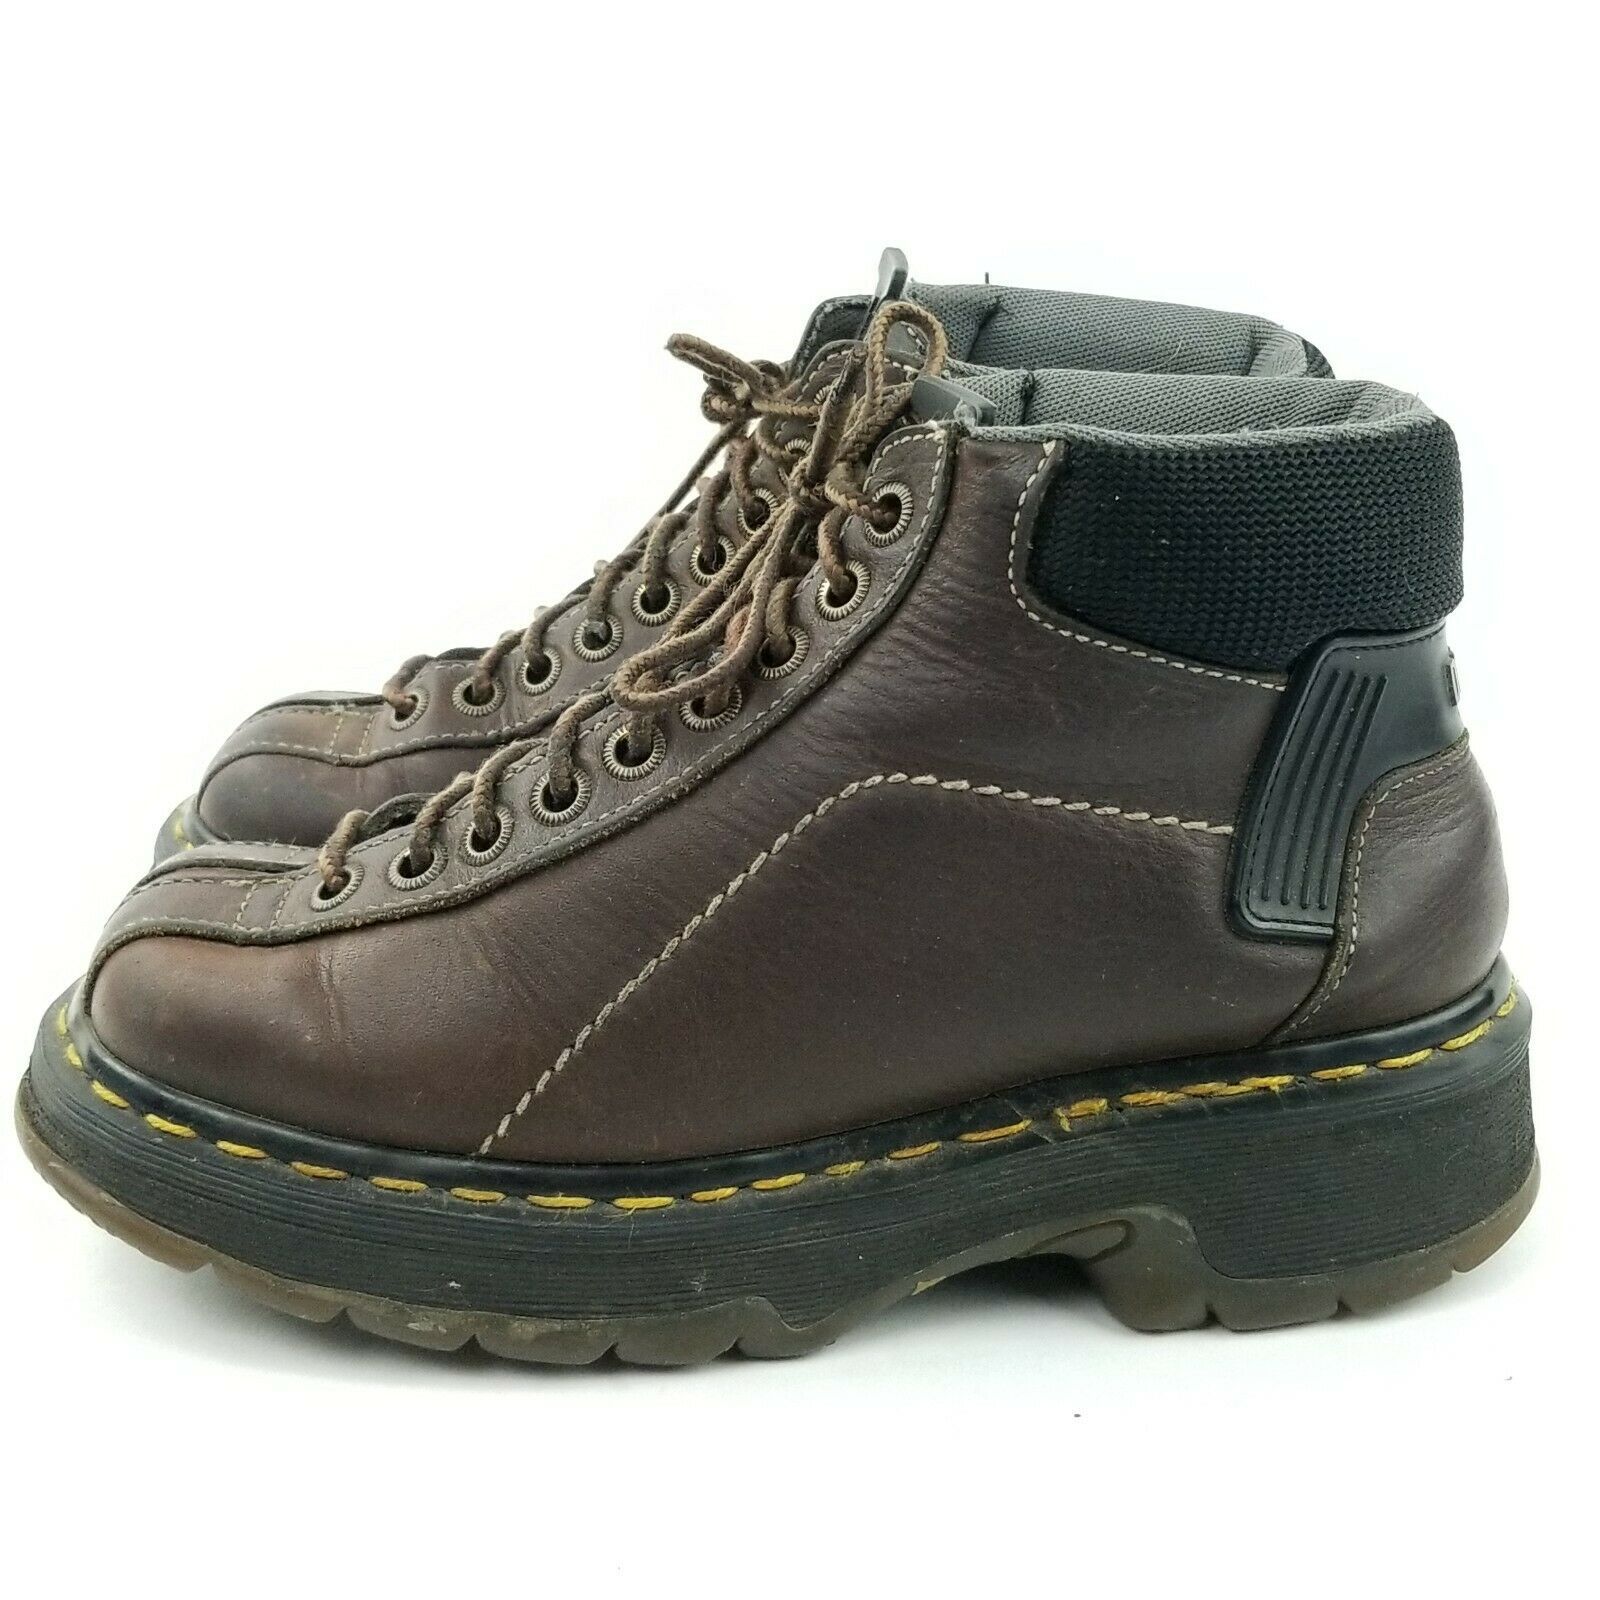 Dr Martens Sz 5 Brown Leather Ankle Boots Women’s 9793 Split Toe - $32.36